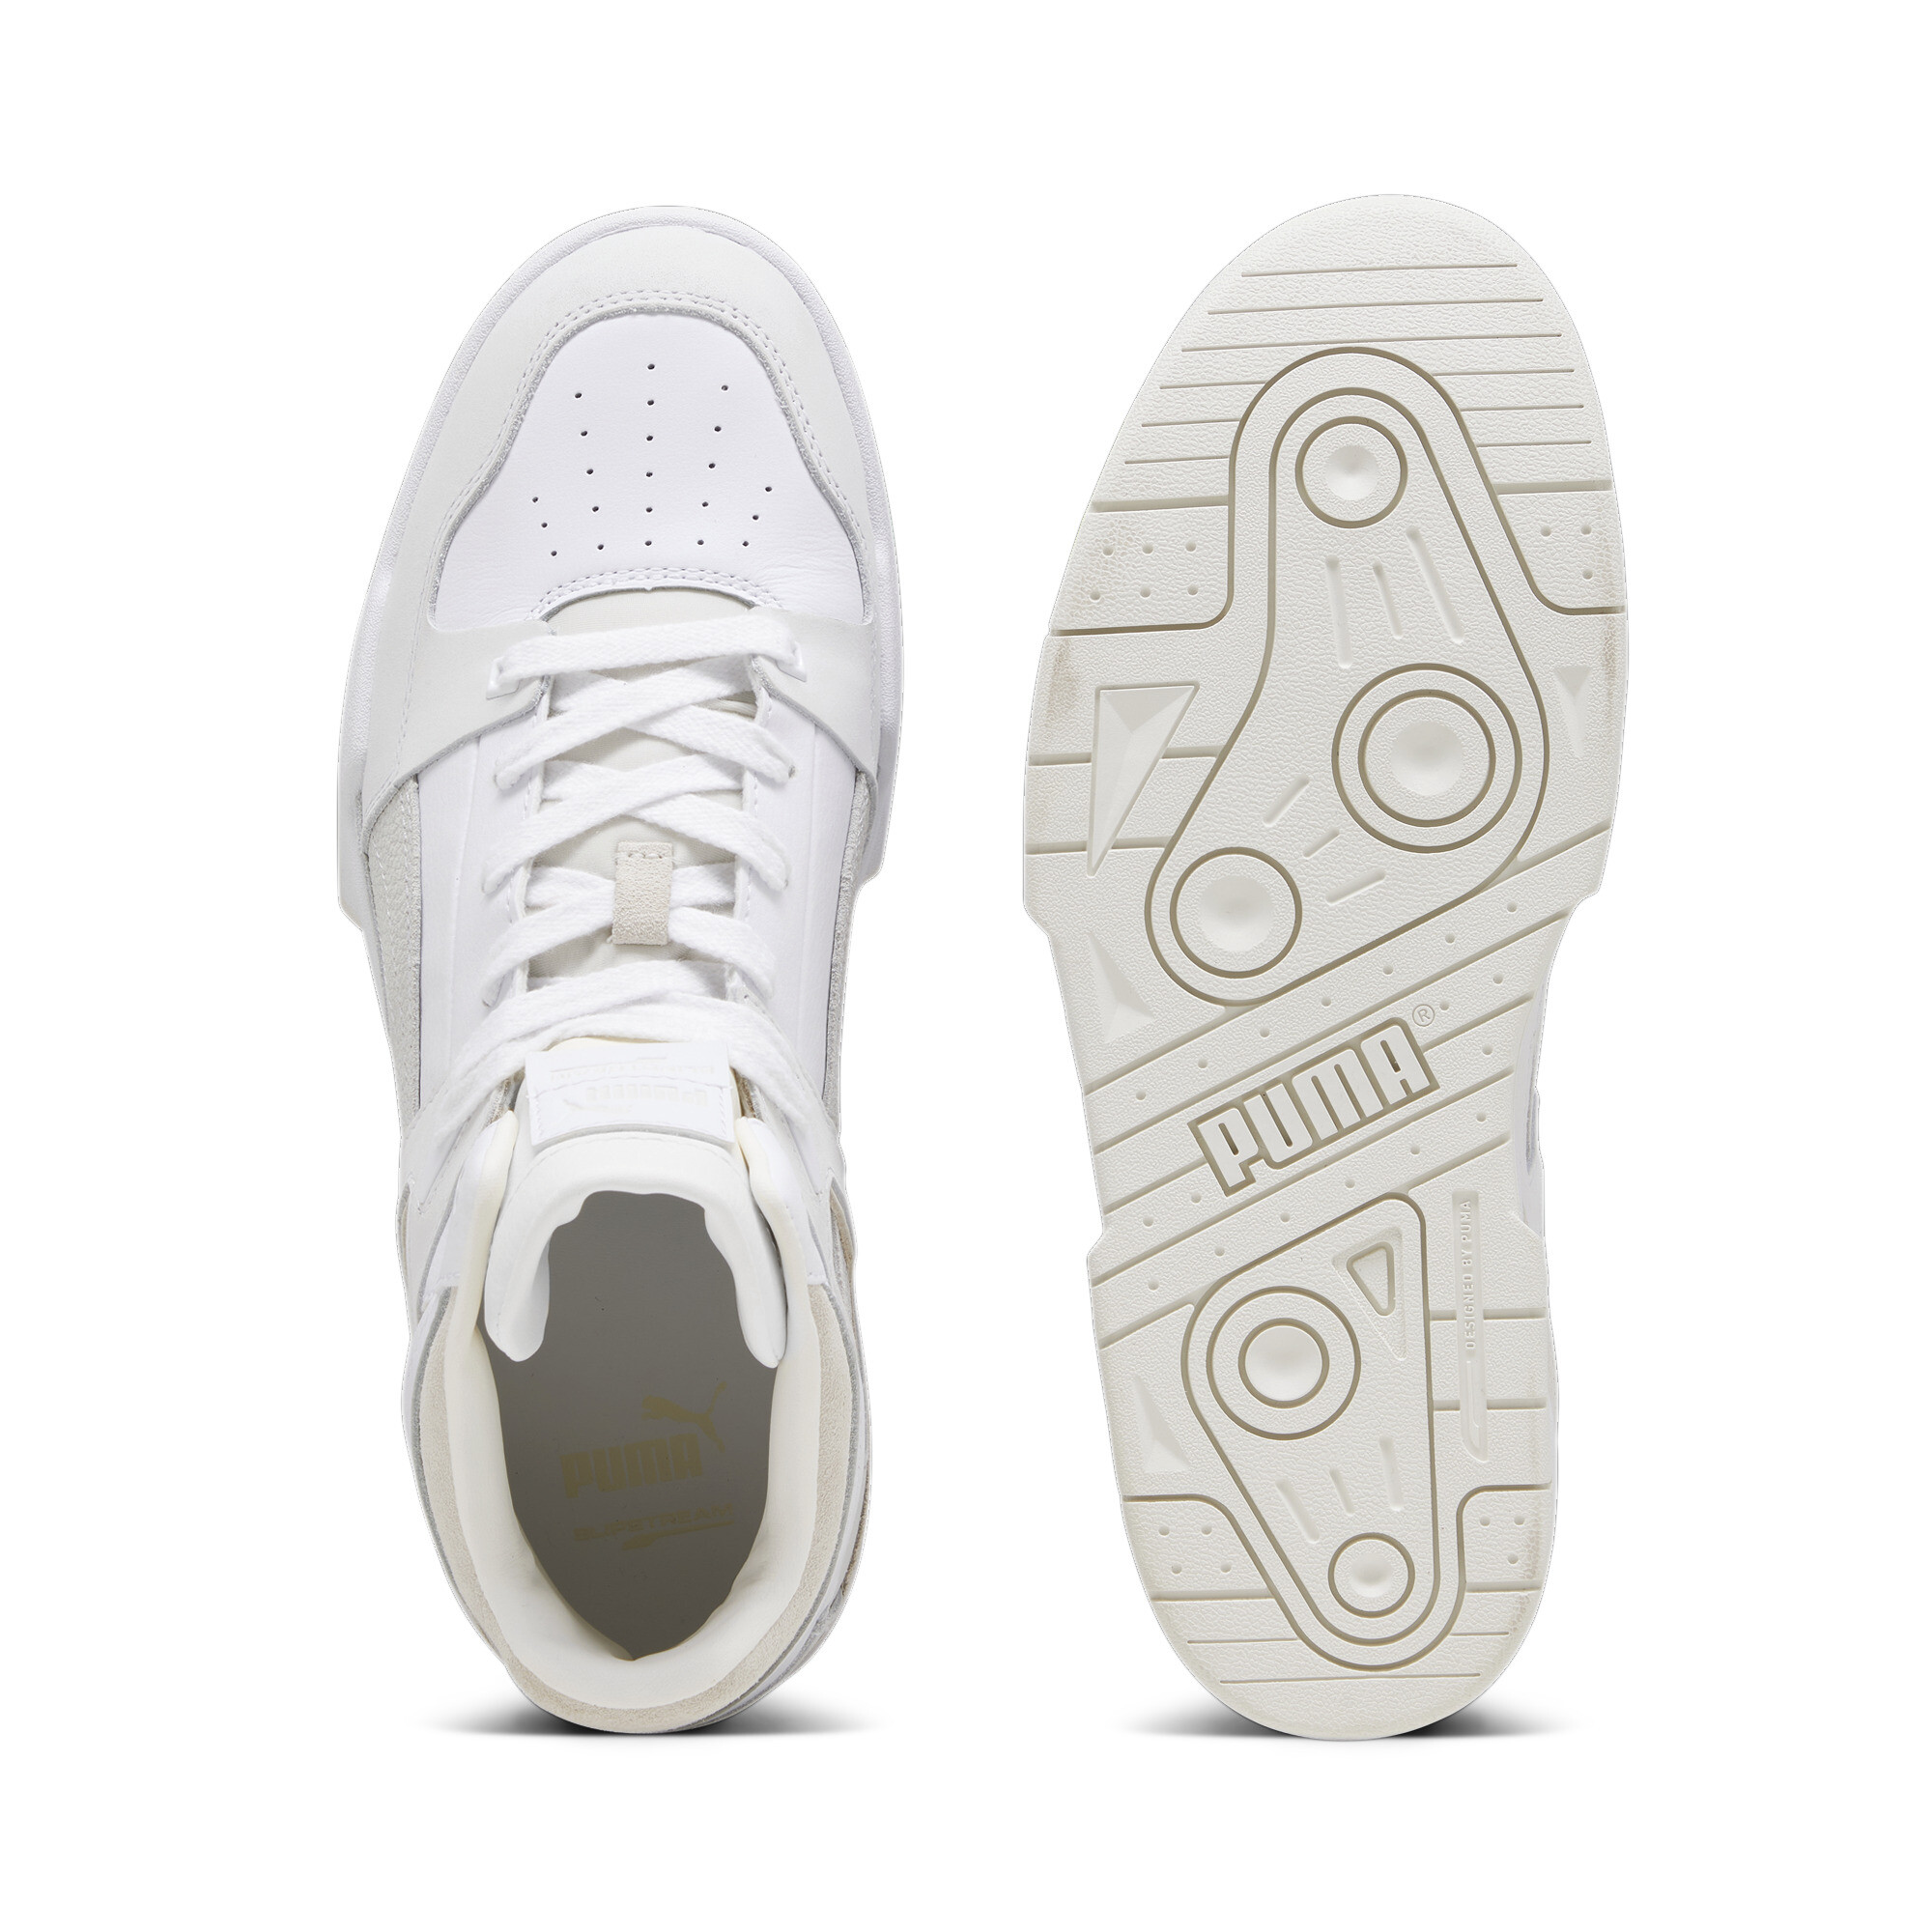 Puma Slipstream Hi Lux II Sneakers, White, Size 37, Shoes